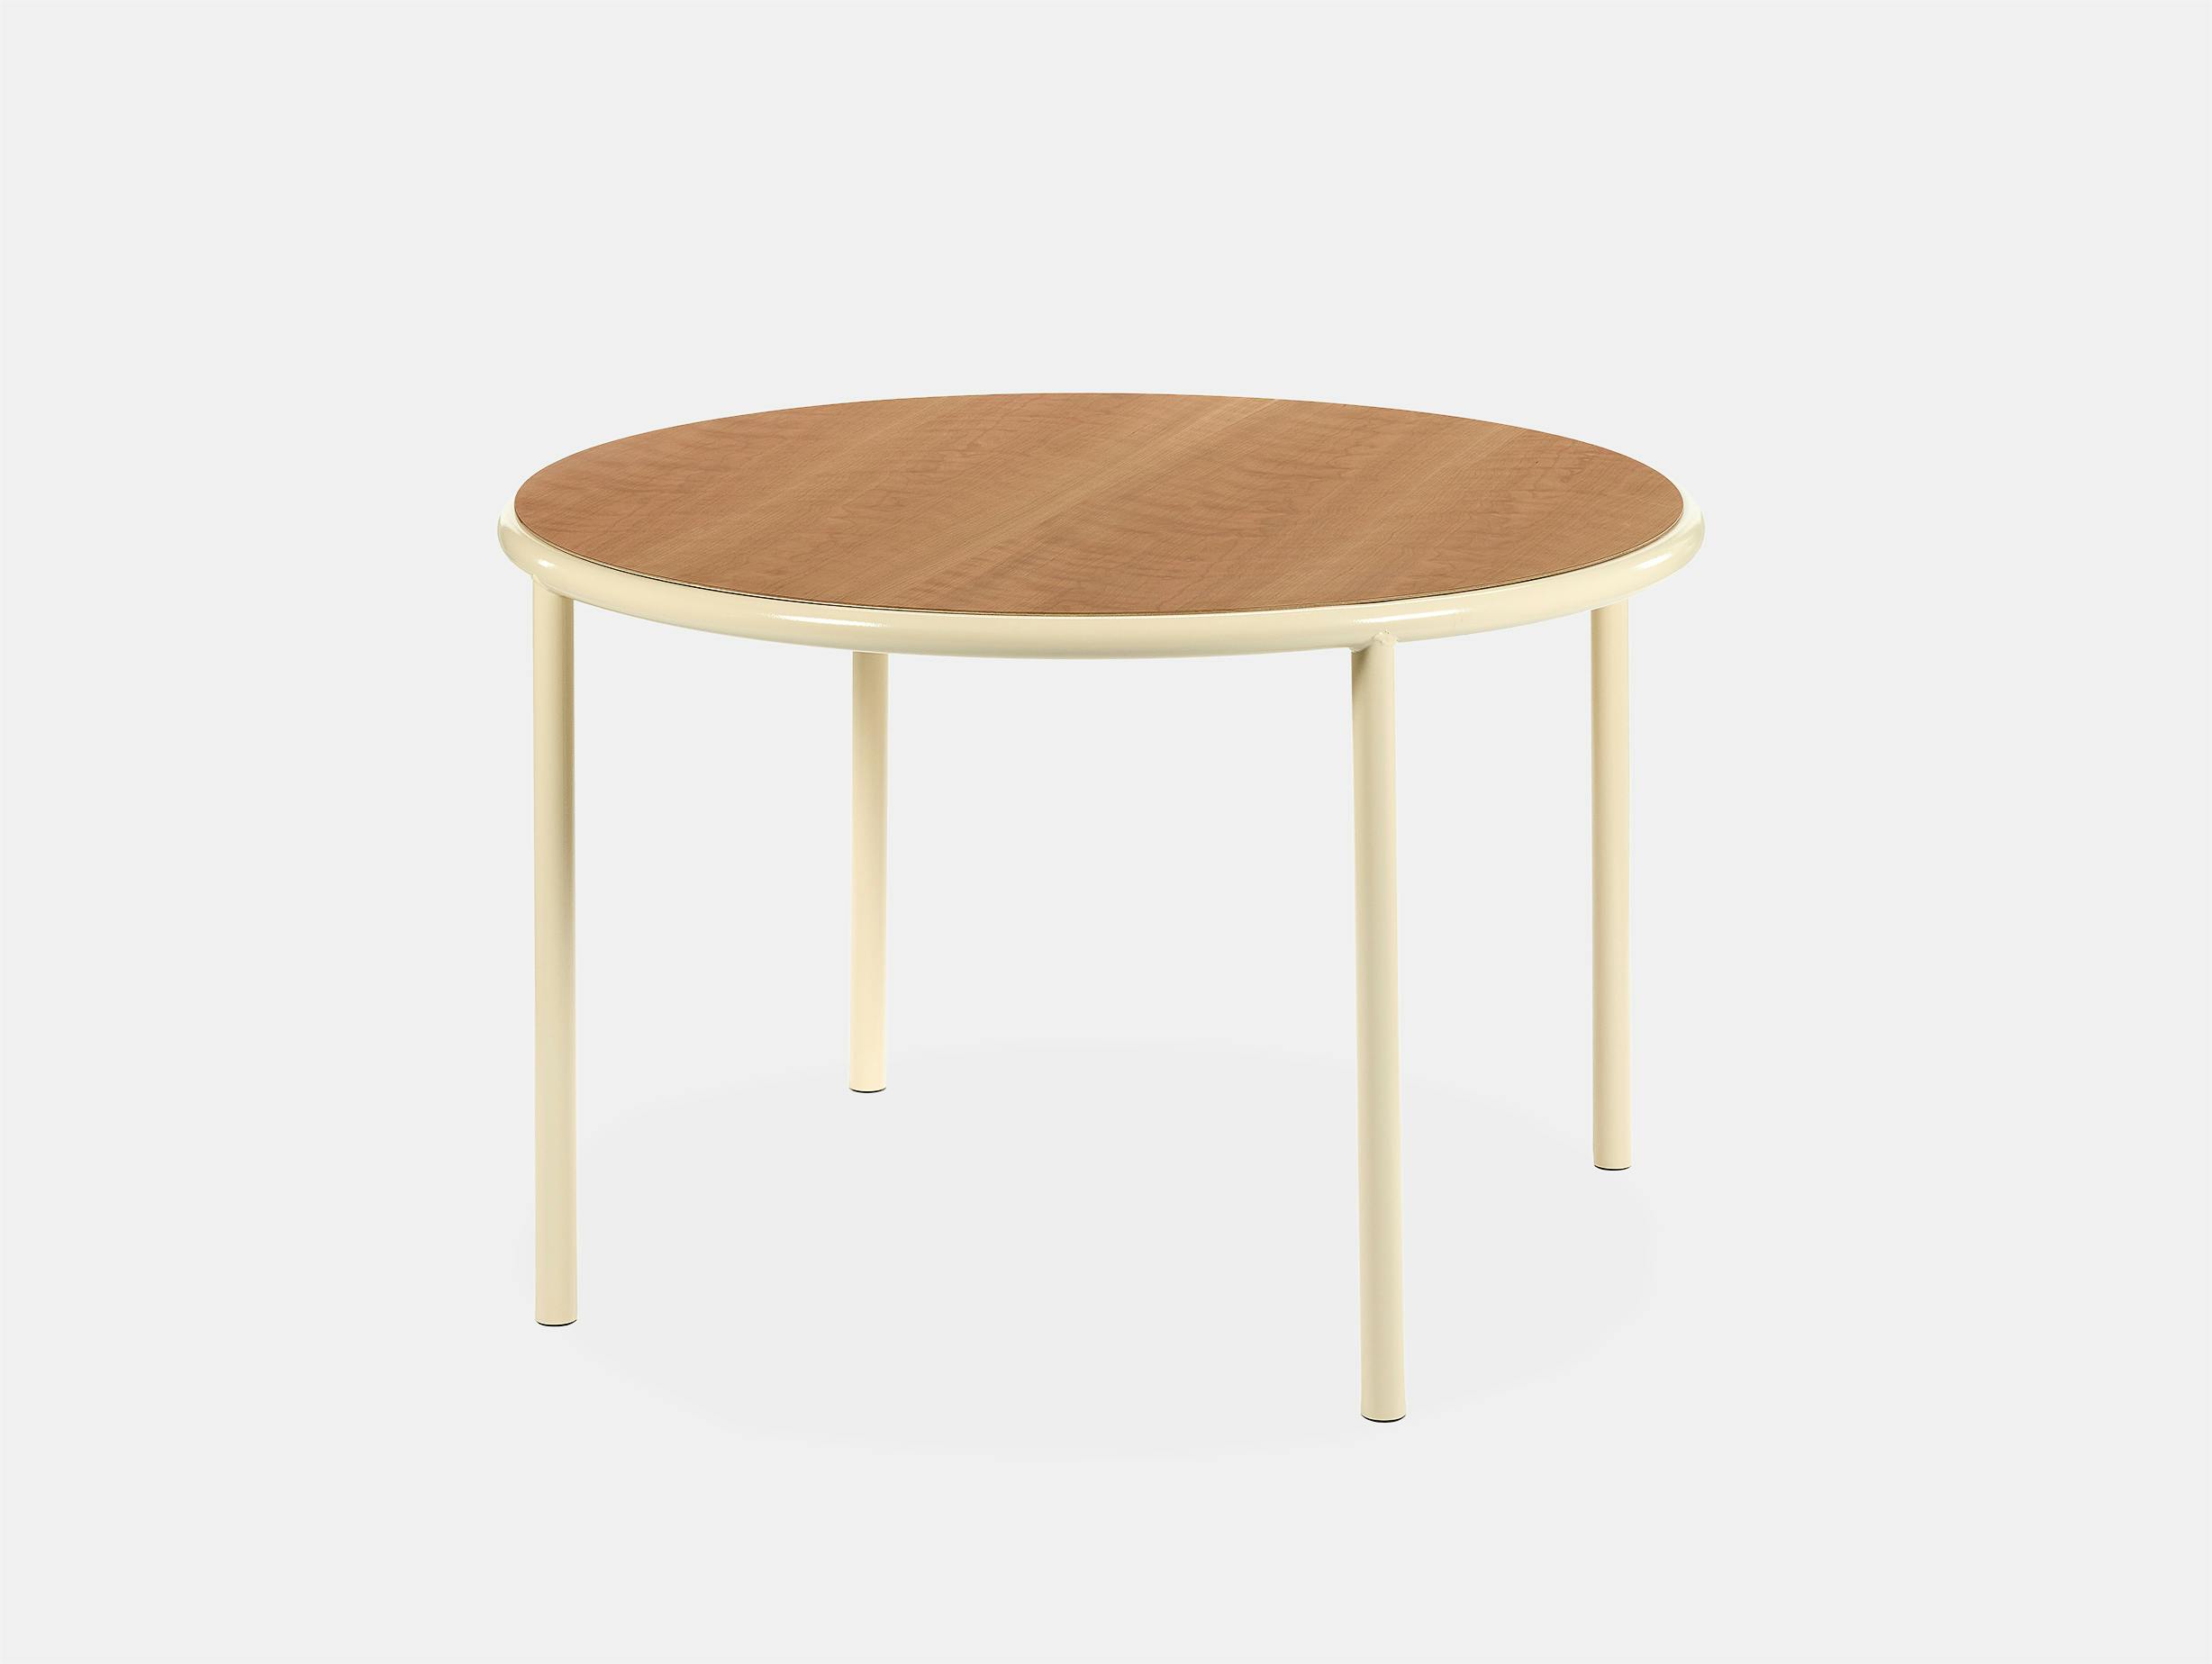 Muller van severen wooden table small round ivory cherry